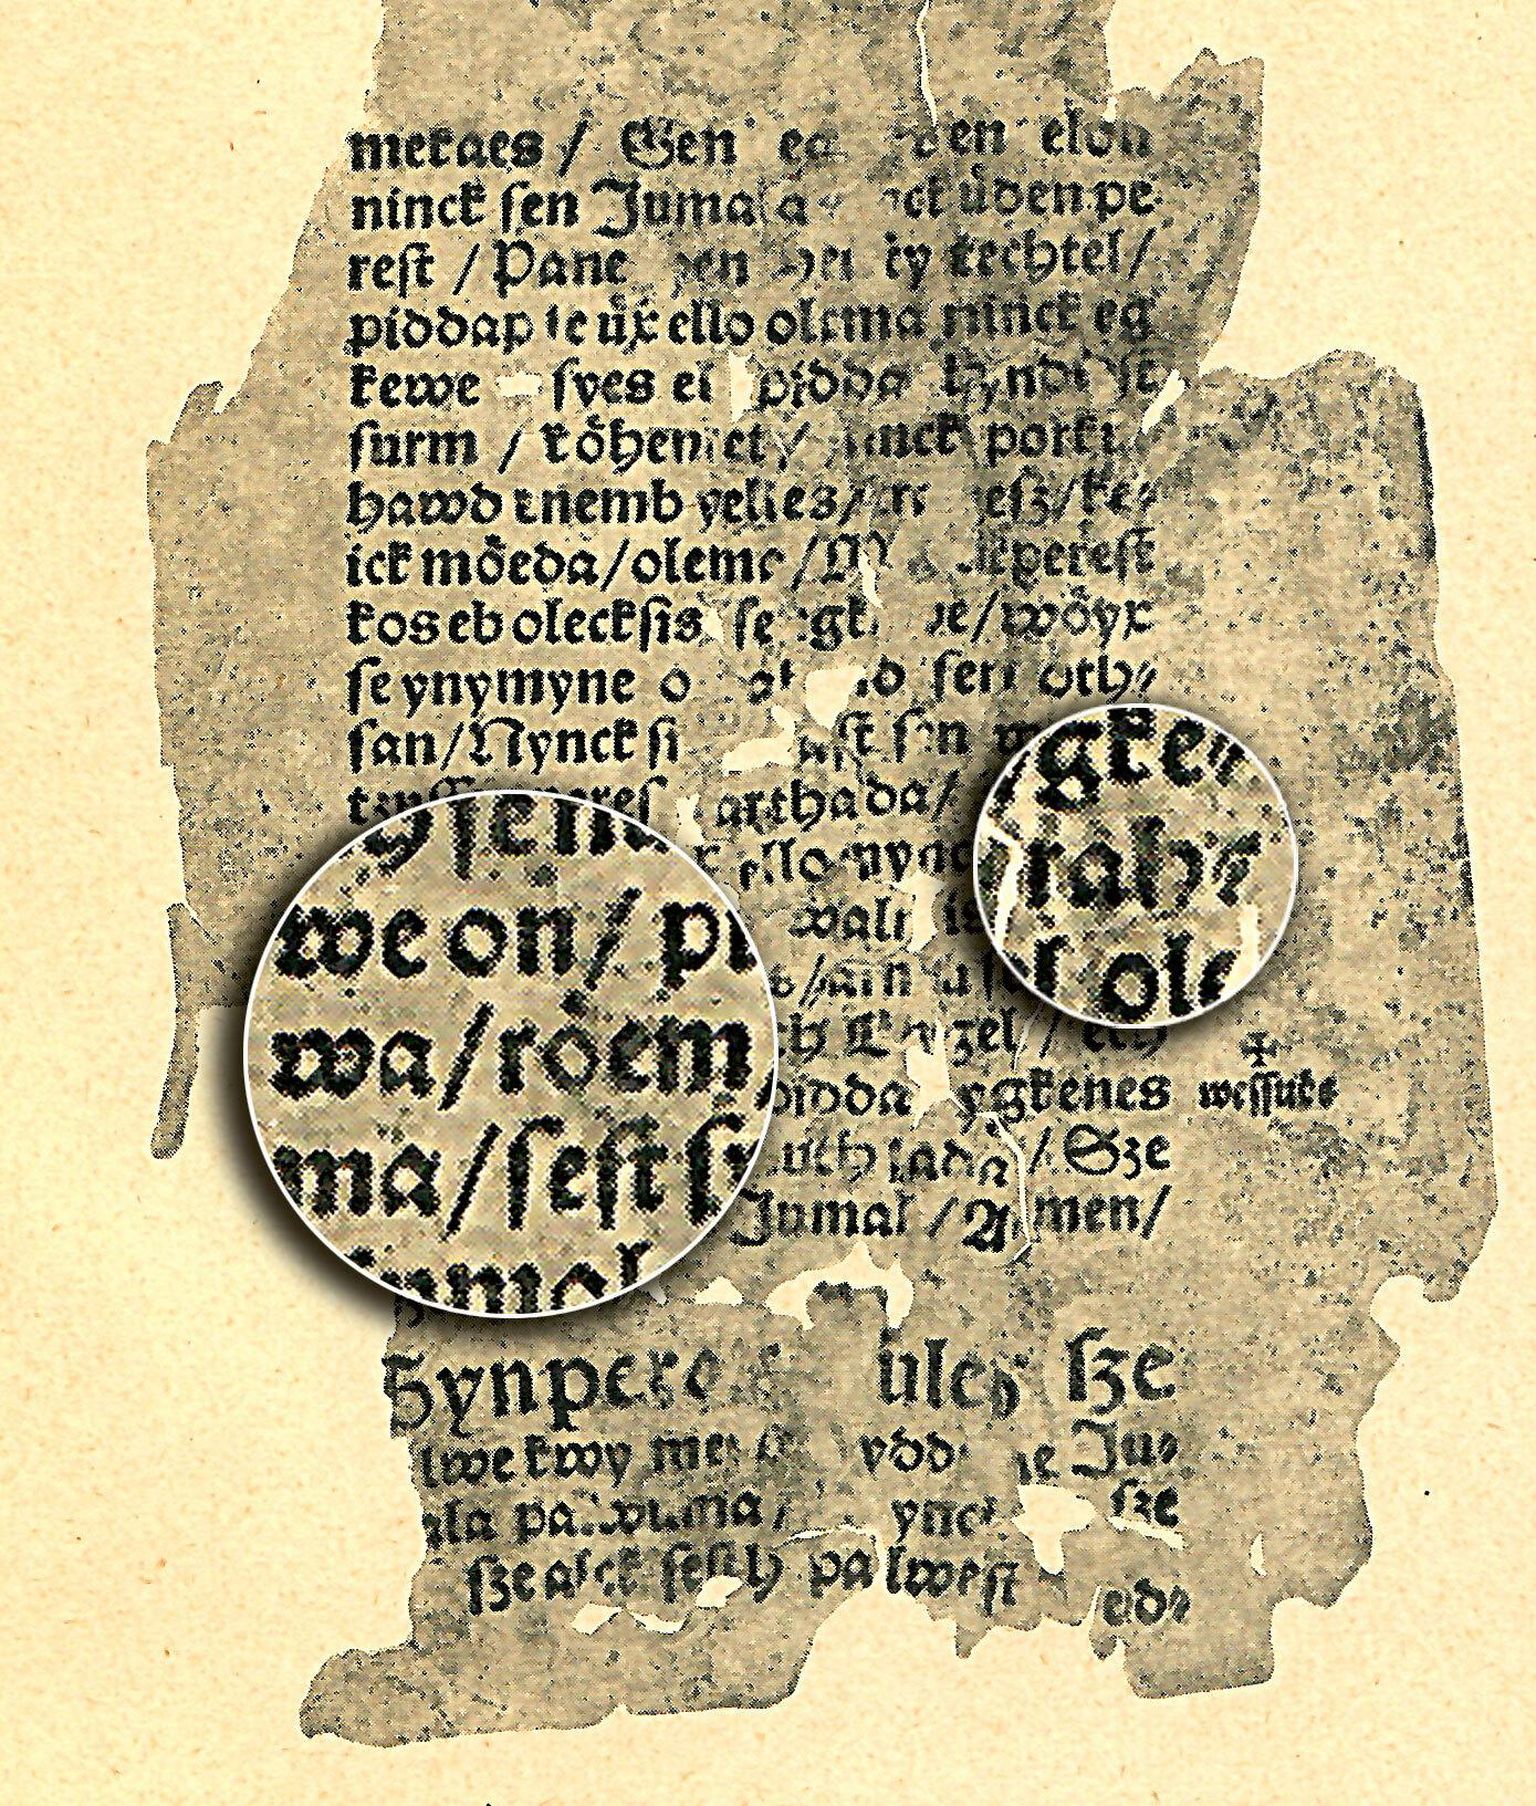 Wanradti-Koelli katekismuses (1535) ehk esimeses säilinud eestikeelses raamatus esineb sõna rahu kujul rahwa.

«M[yn]ckperest kos eb olecksis se egk[e]we/wöyx se ynymyne o[m]ah[e]nd sen othsan/Nynck si[nper]ast sen wylletzussen peres[t] [k]arthada/Wayd eth se nüedt üx ello nynck ygkewe on pidda[p] walmis/rahwa/röem/sö[pr]us/armu seel olema/sest syna/Ech Engel/ech Jumal ysse/eb pidda ygkenes wöyma wessi[n]uth sada/Sze [a]ntkuth meyle Jumal/Amen/»